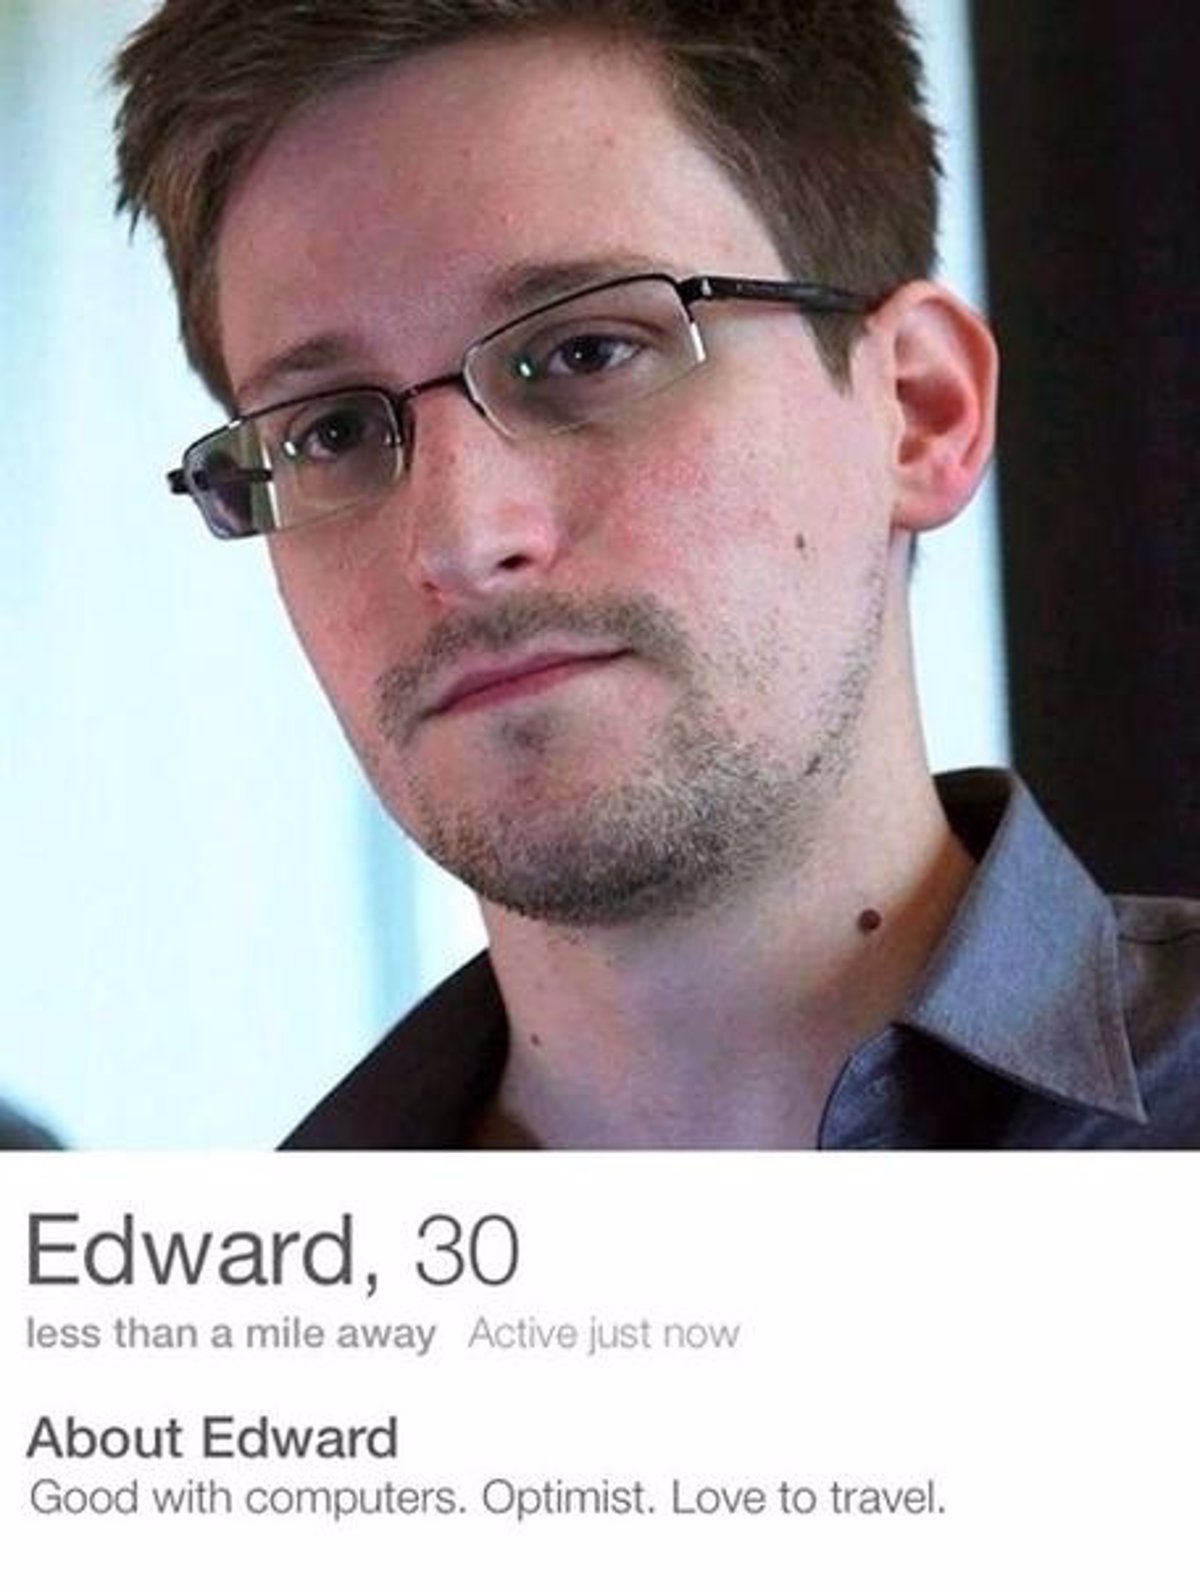 Crean Un Perfil Falso De Edward Snowden En La App De Ligar Tinder 